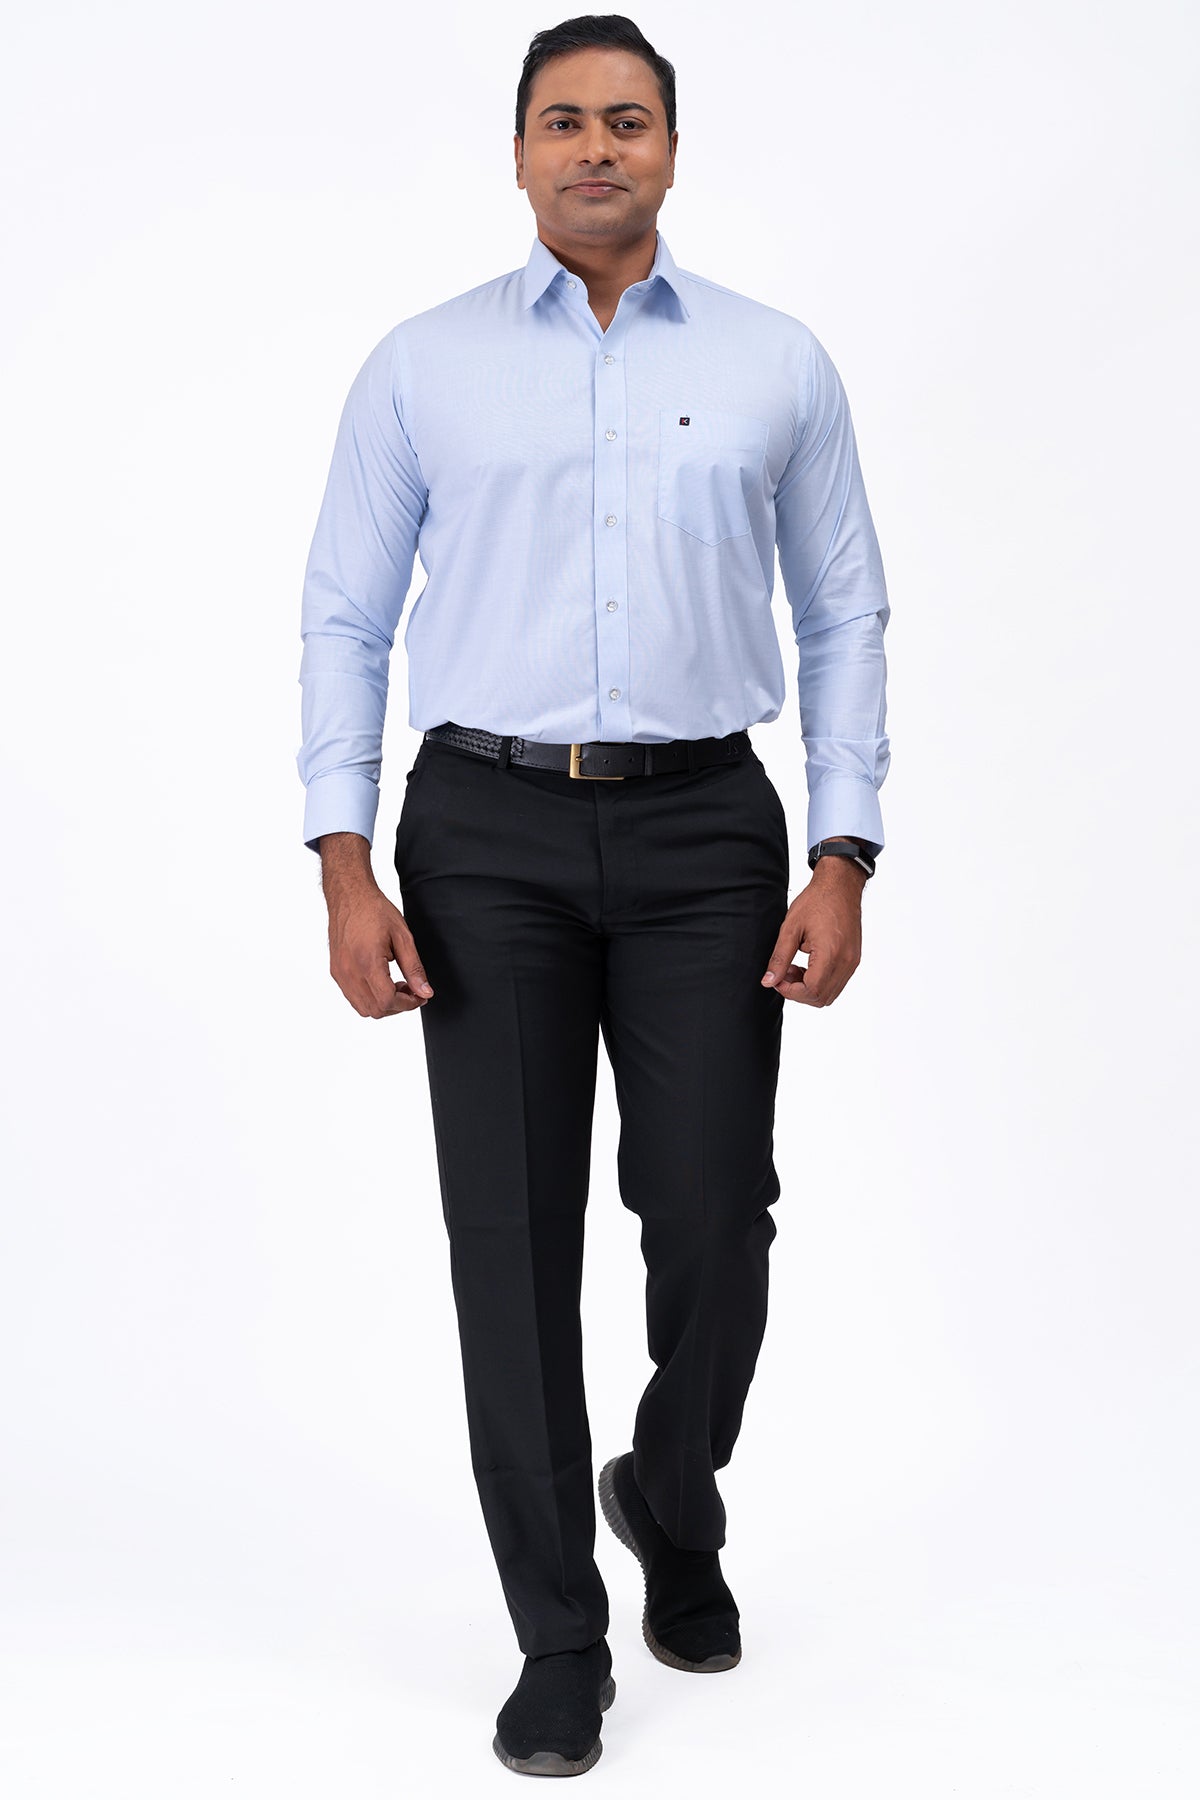 Classy Black Skinny Fit Stretchablle Trouser Blue Shirt Optional – Sujatra